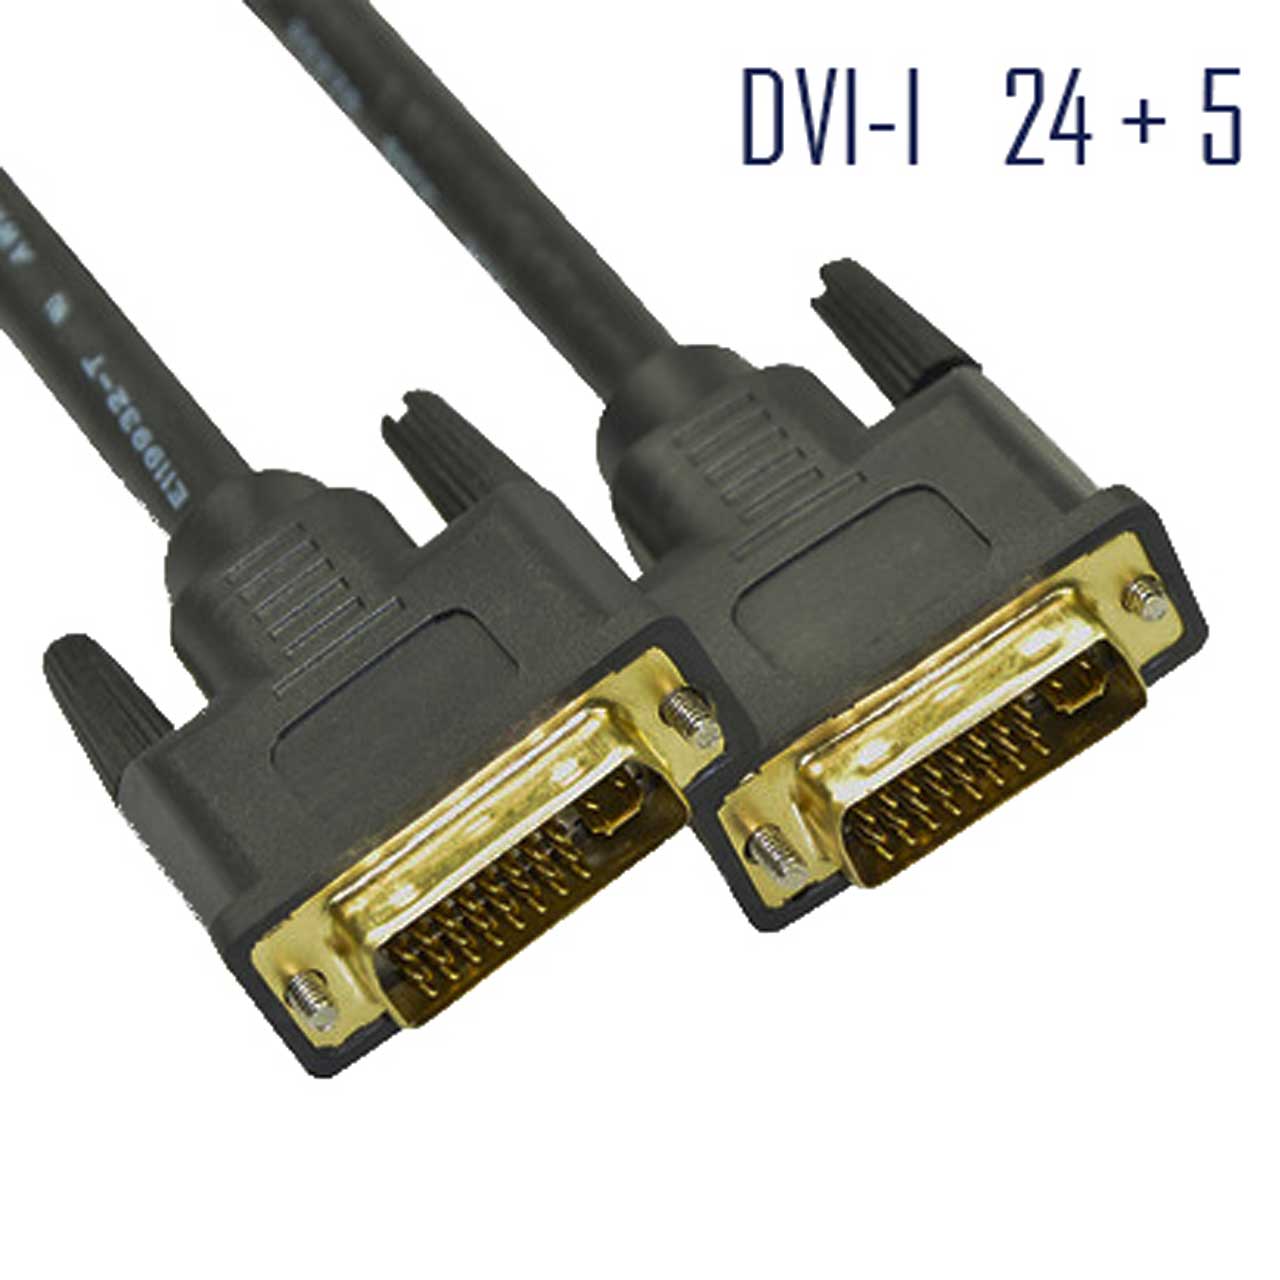 کابل DVI-I Dual Link